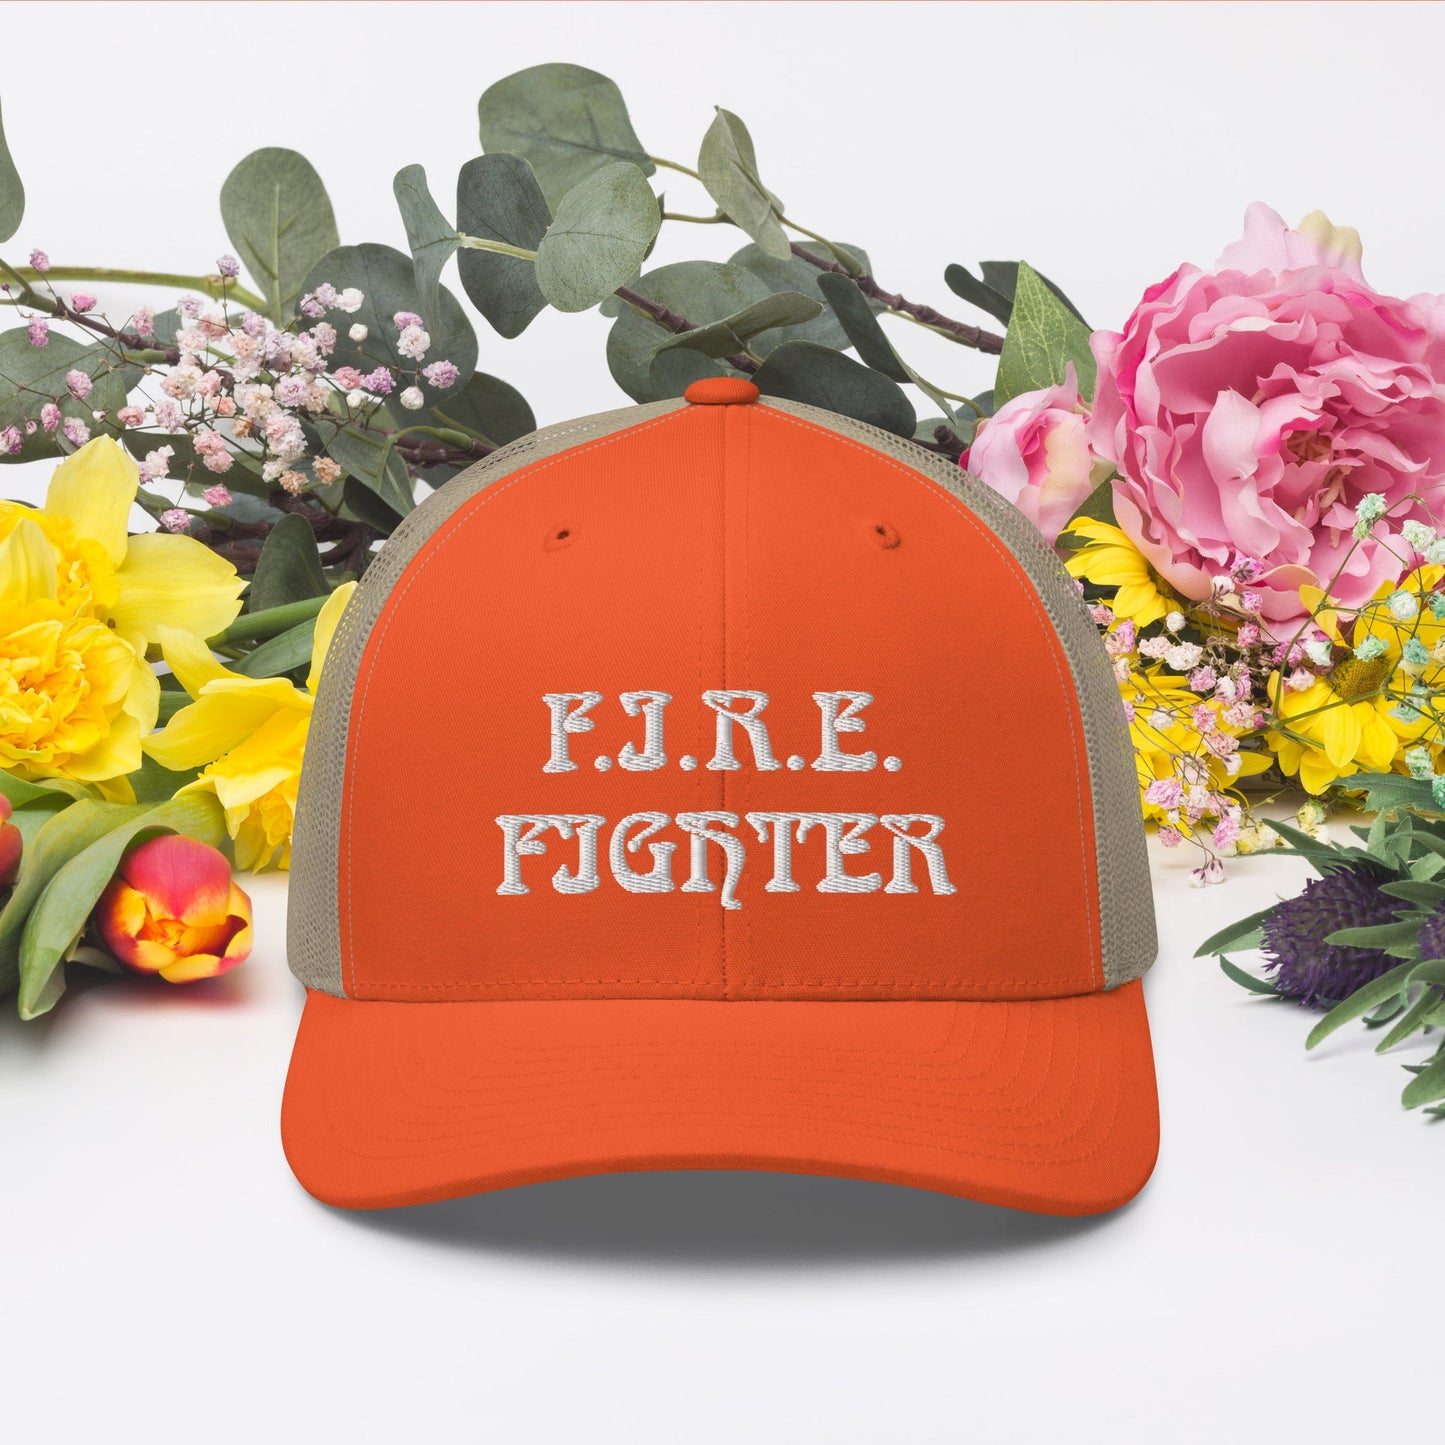 F.I.R.E FIGHTER - Trucker Cap - Albasat Designs